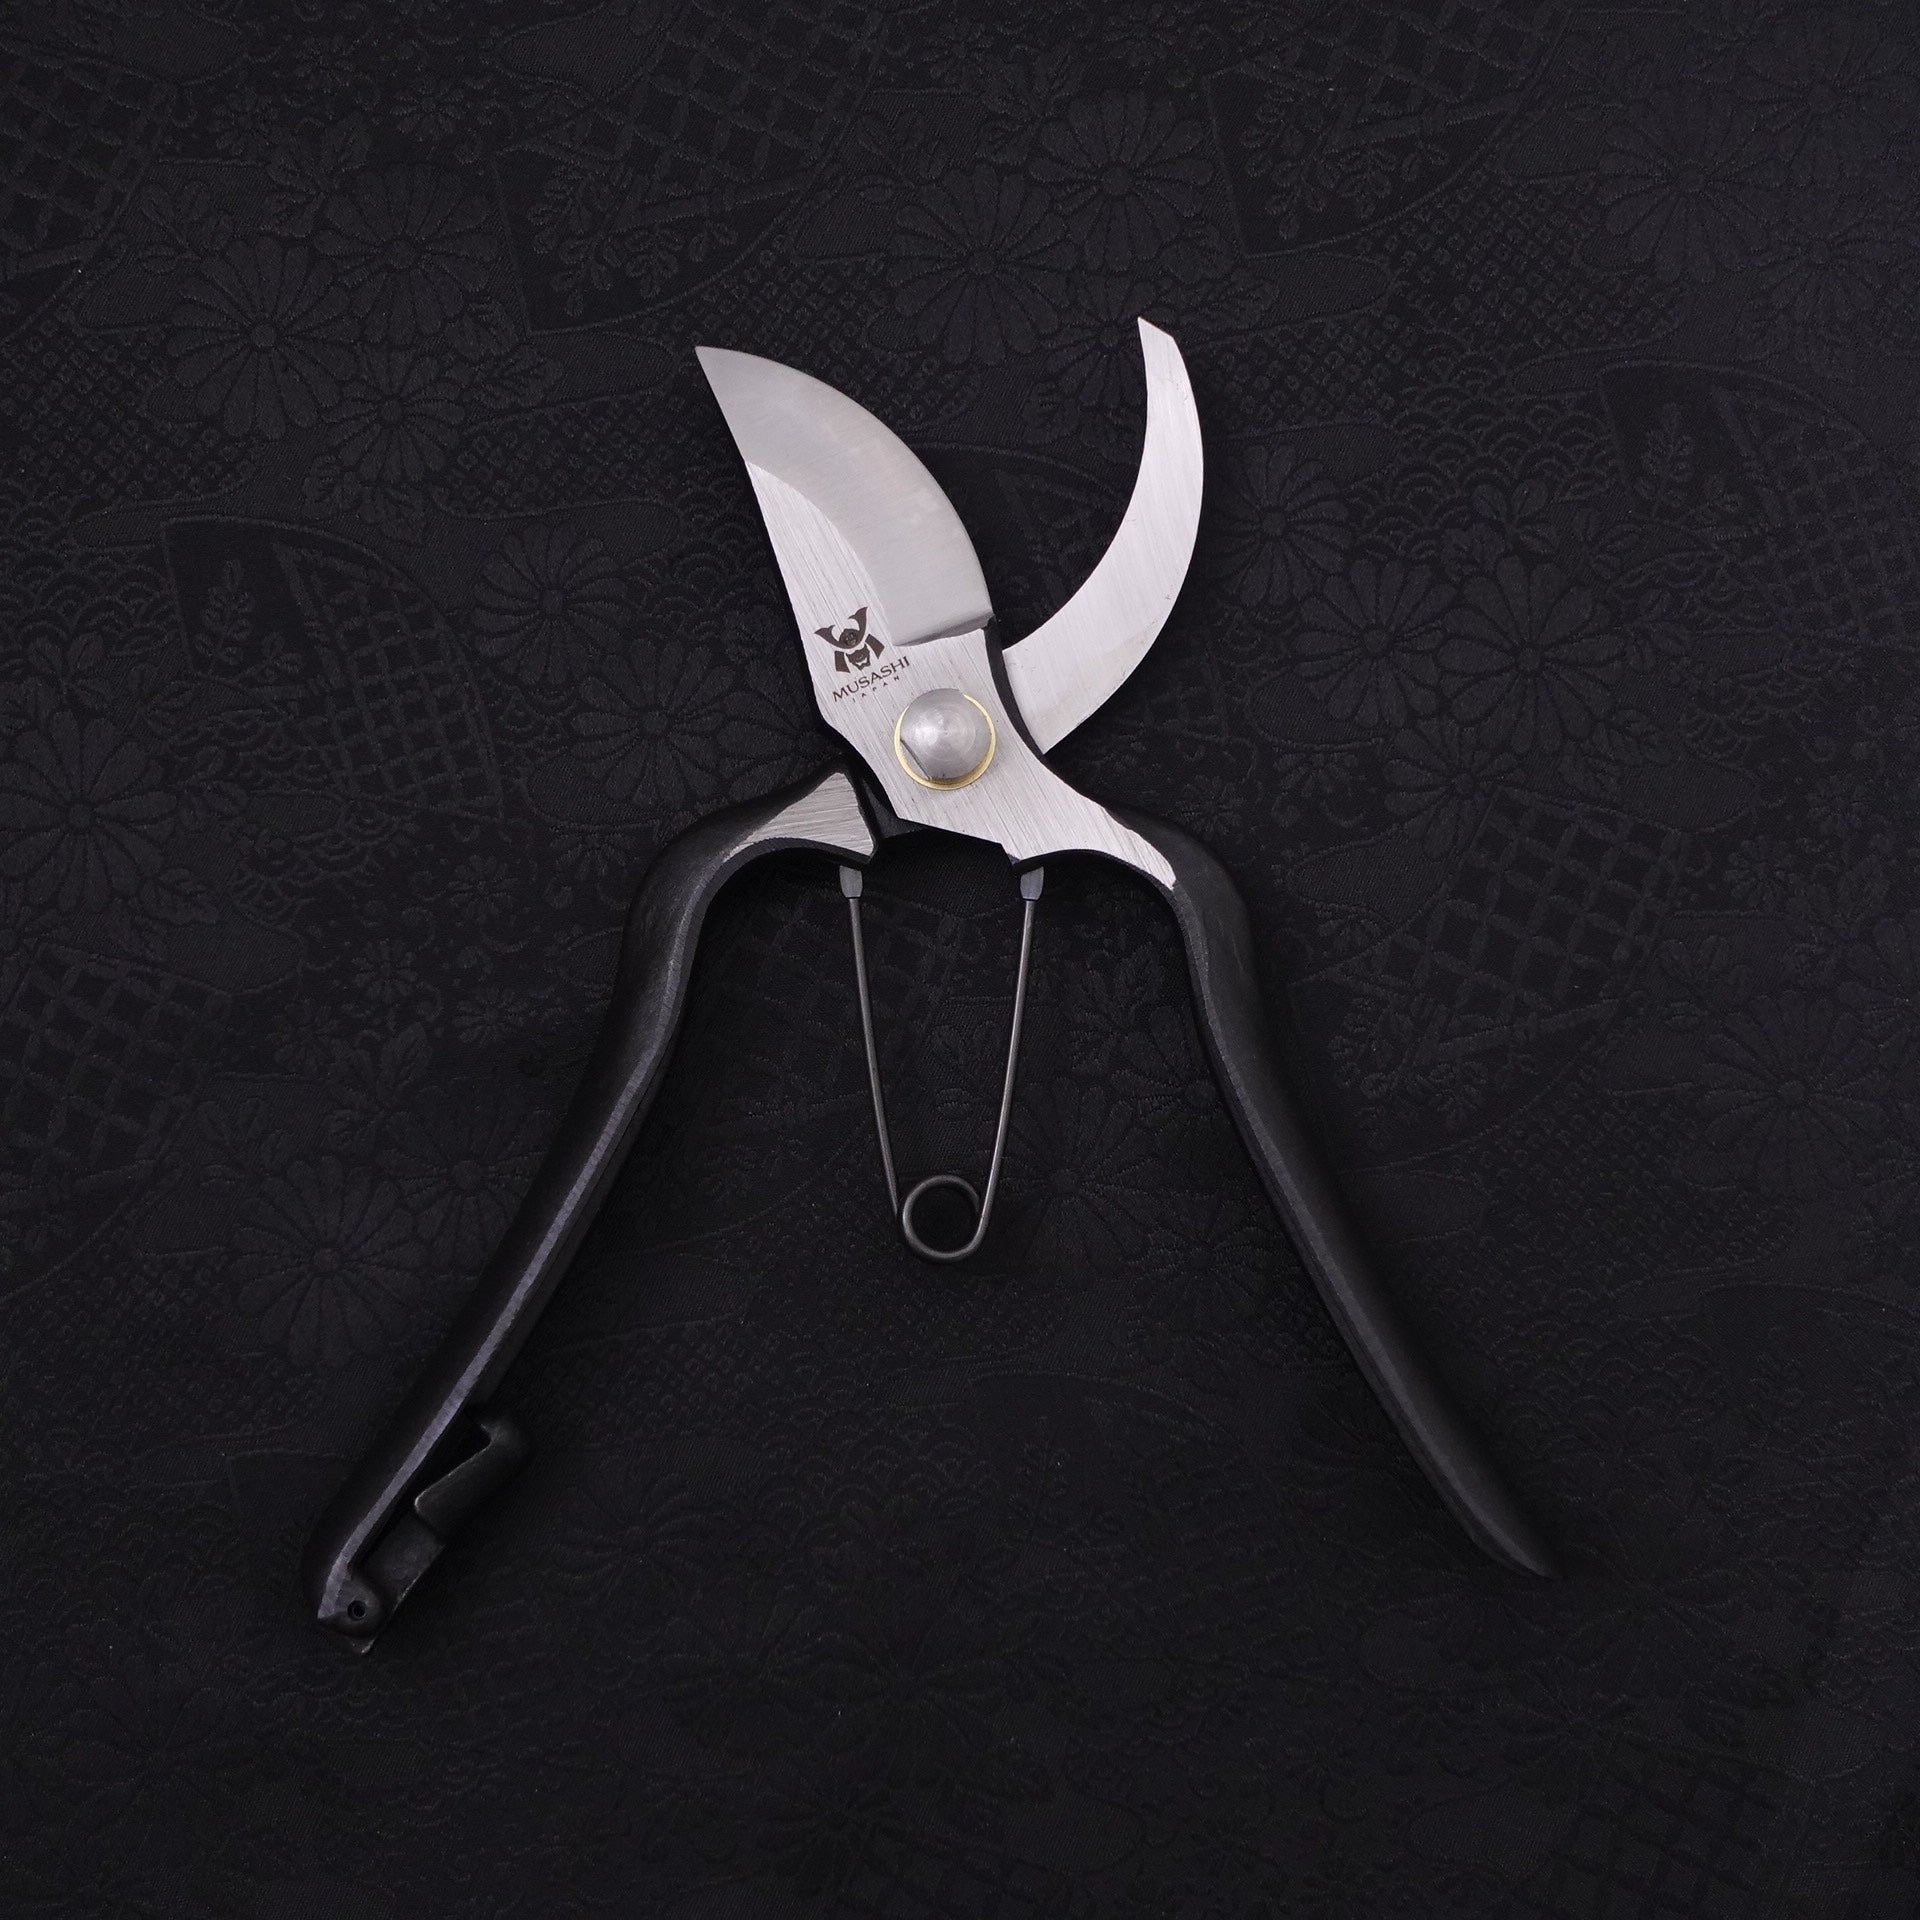 Black Musashi Pruning Shears / Garden Scissors B Type Forged Handmade 200mm